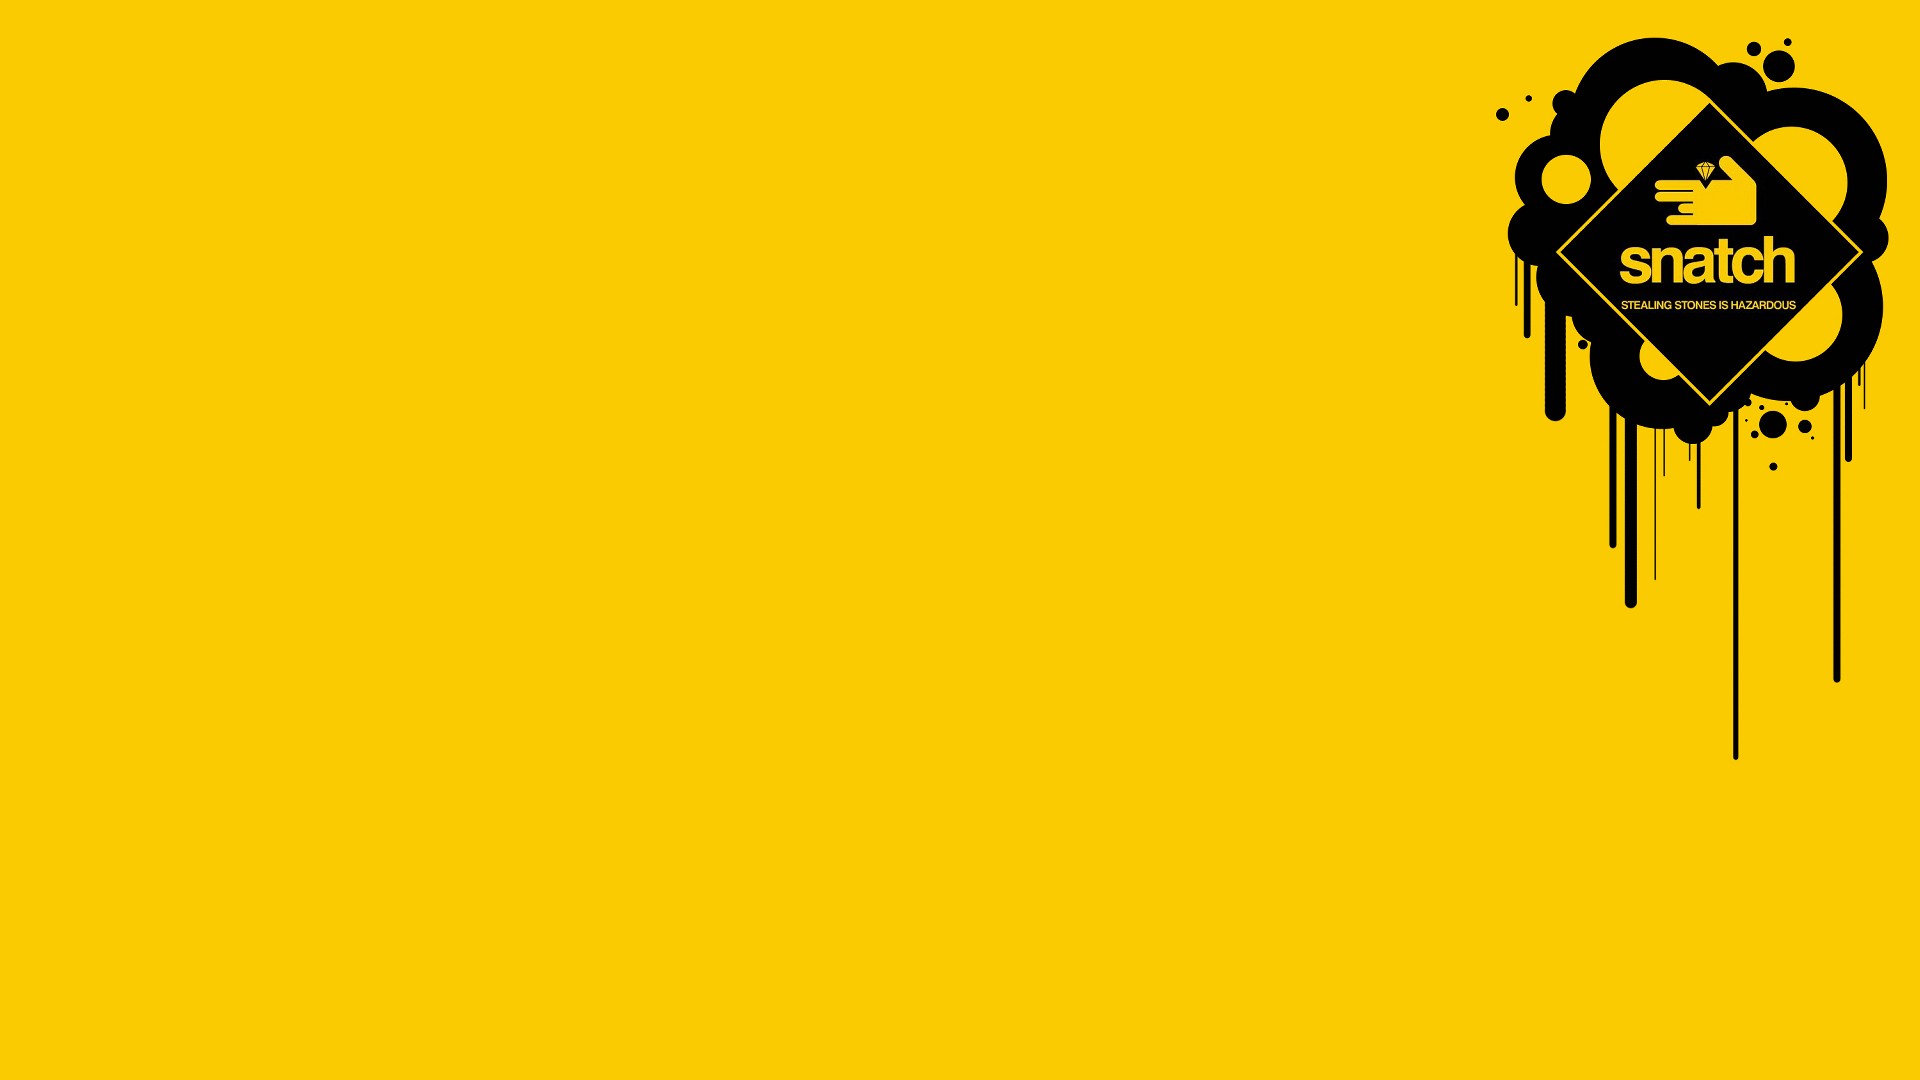 General 1920x1080 minimalism yellow background typography simple background Snatch (Movie)